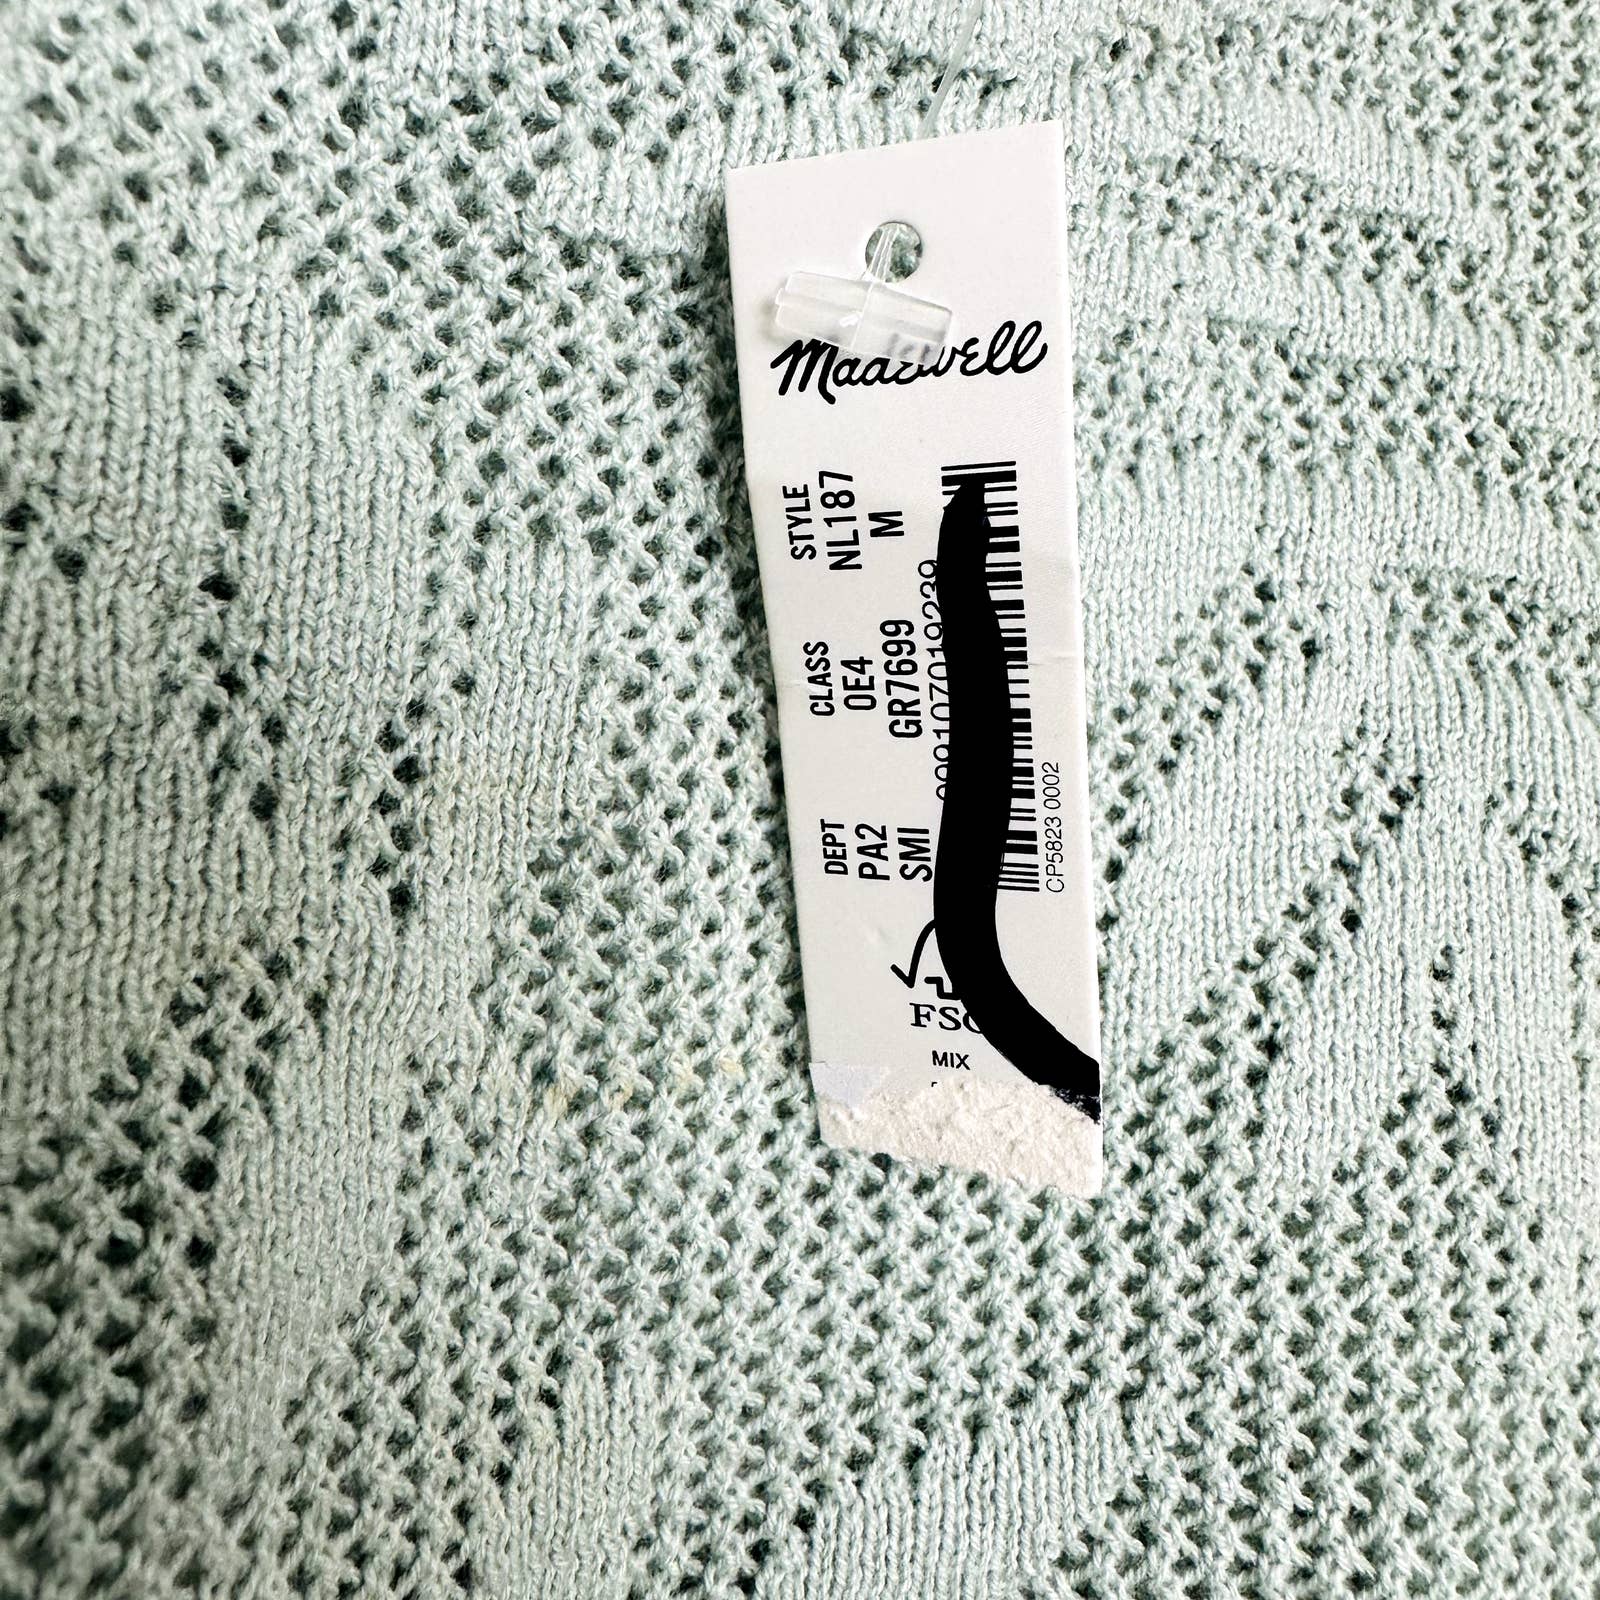 Madewell NWT Palm-Stitch Crop Sweater Tank in Sage Mist Size Medium